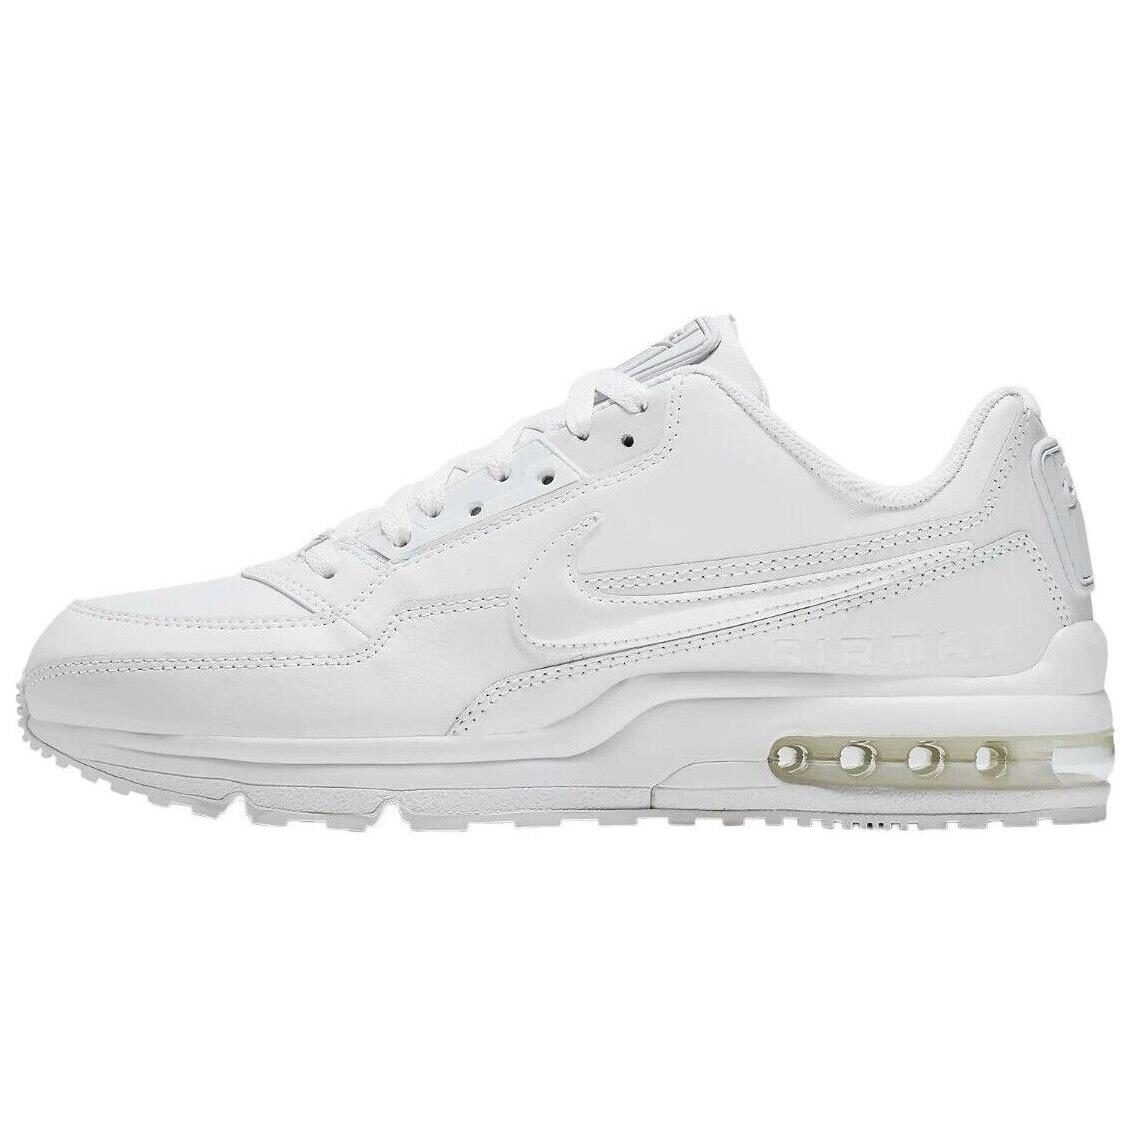 Nike Air Max Ltd 3 Men`s Casual Shoes All Colors US Sizes 7-14 - Triple White